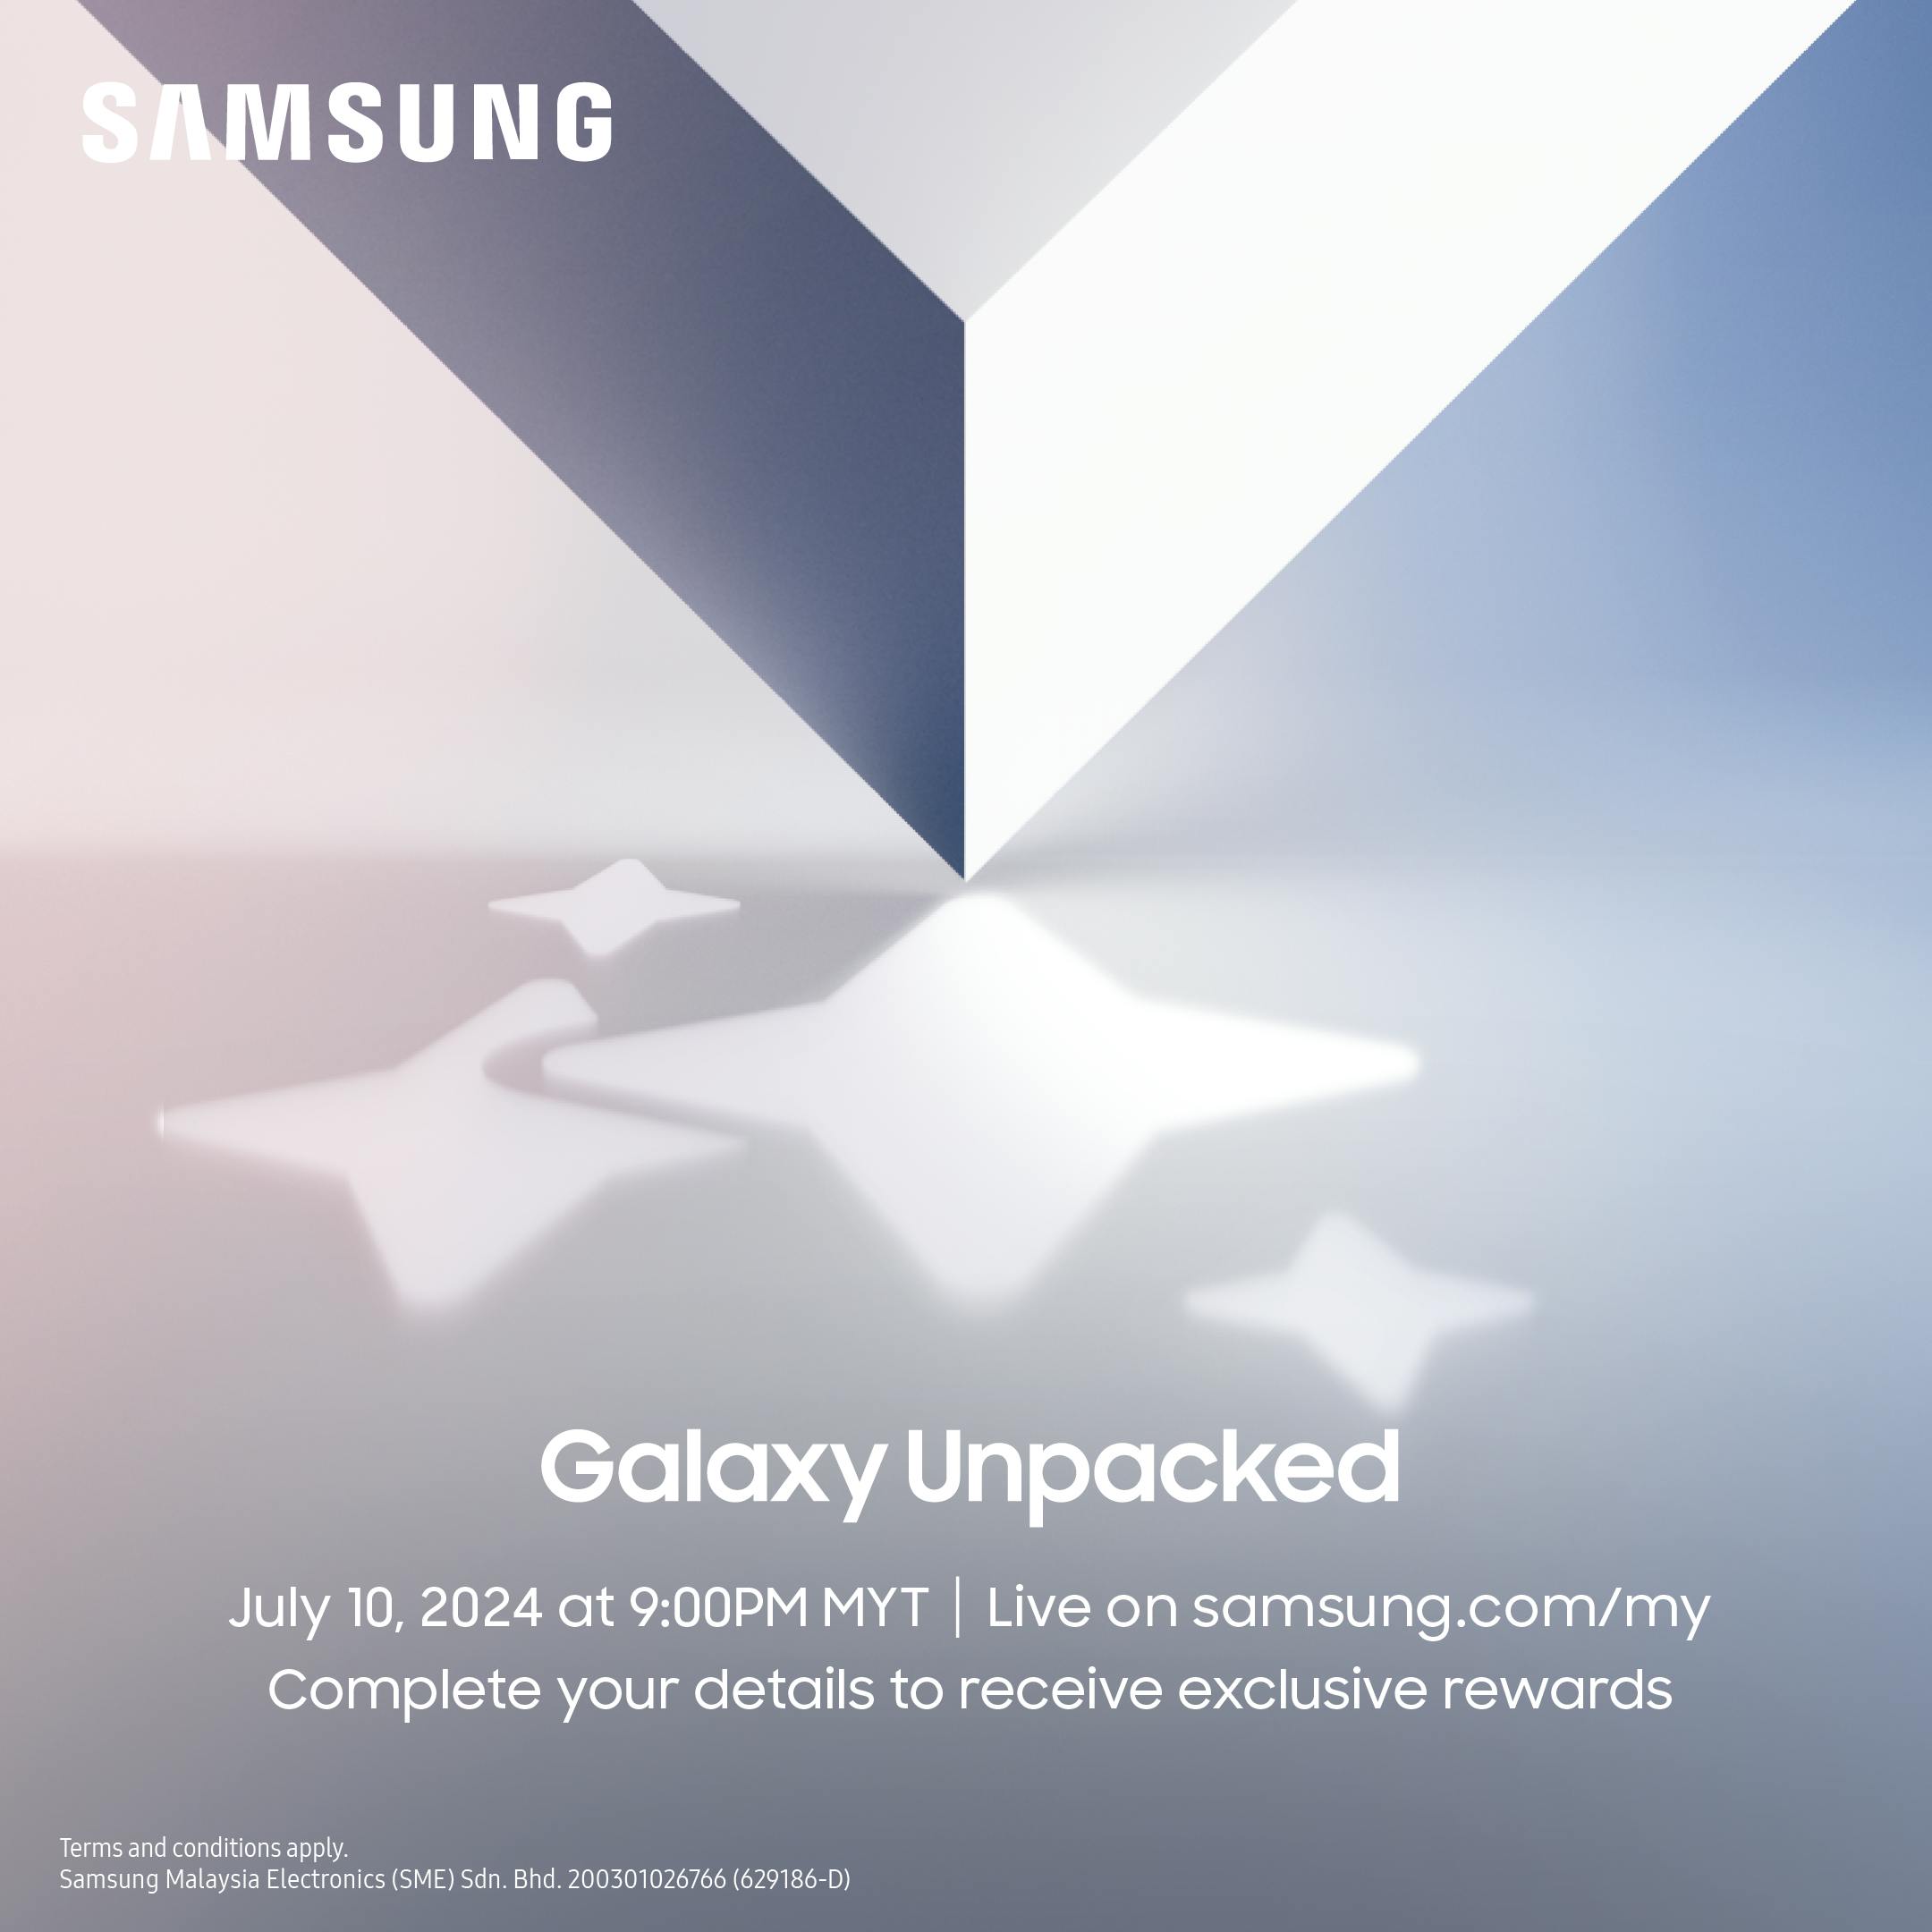 Samsung-Galaxy-Unpacked